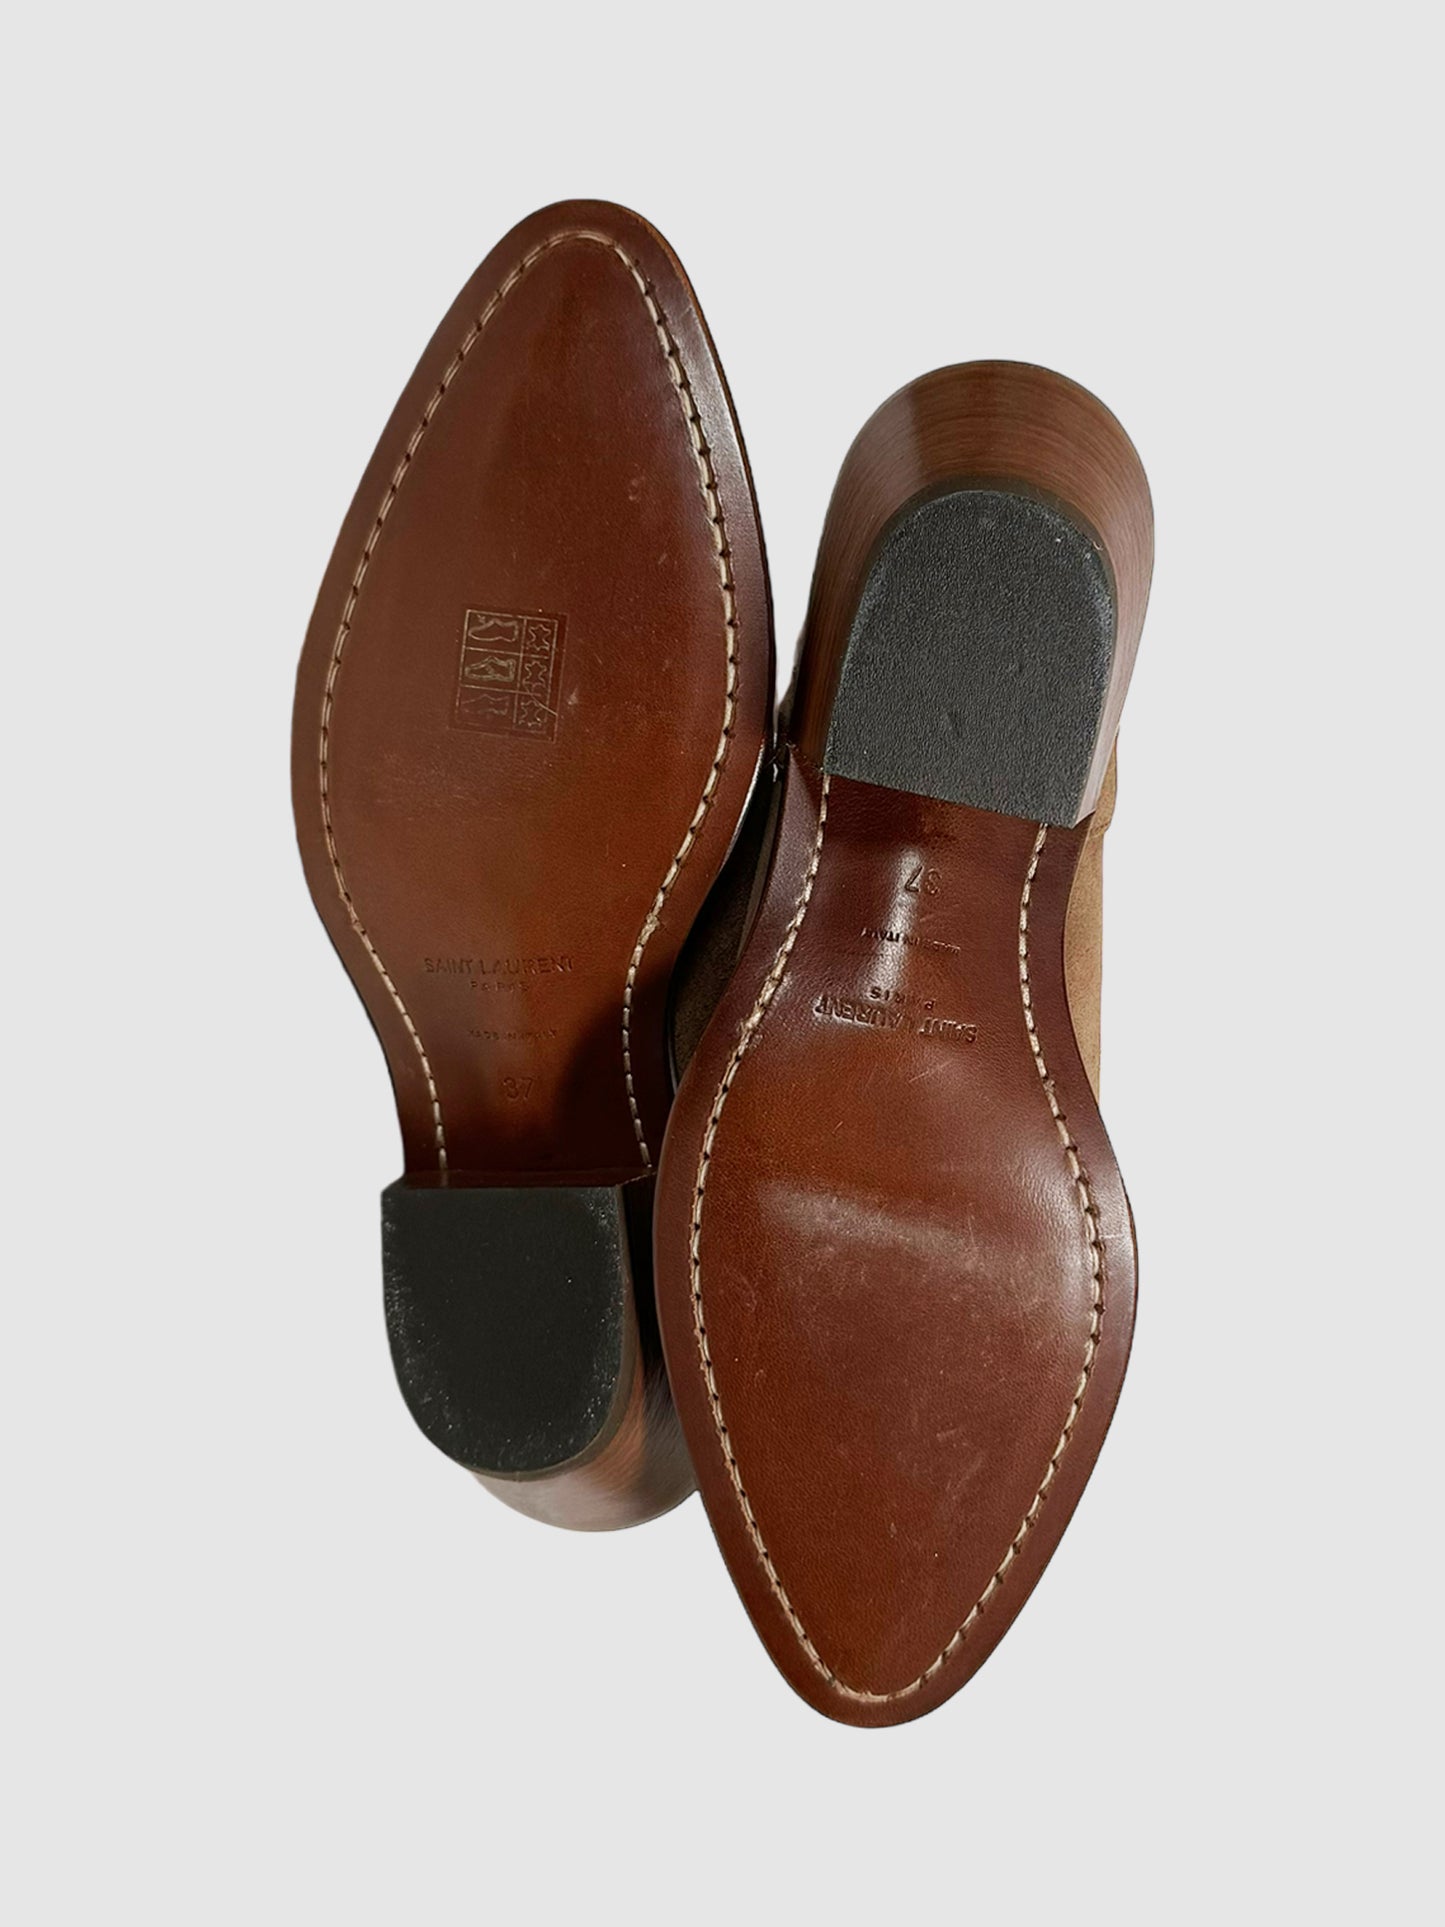 Eastwood Santiag Boots - Size 37